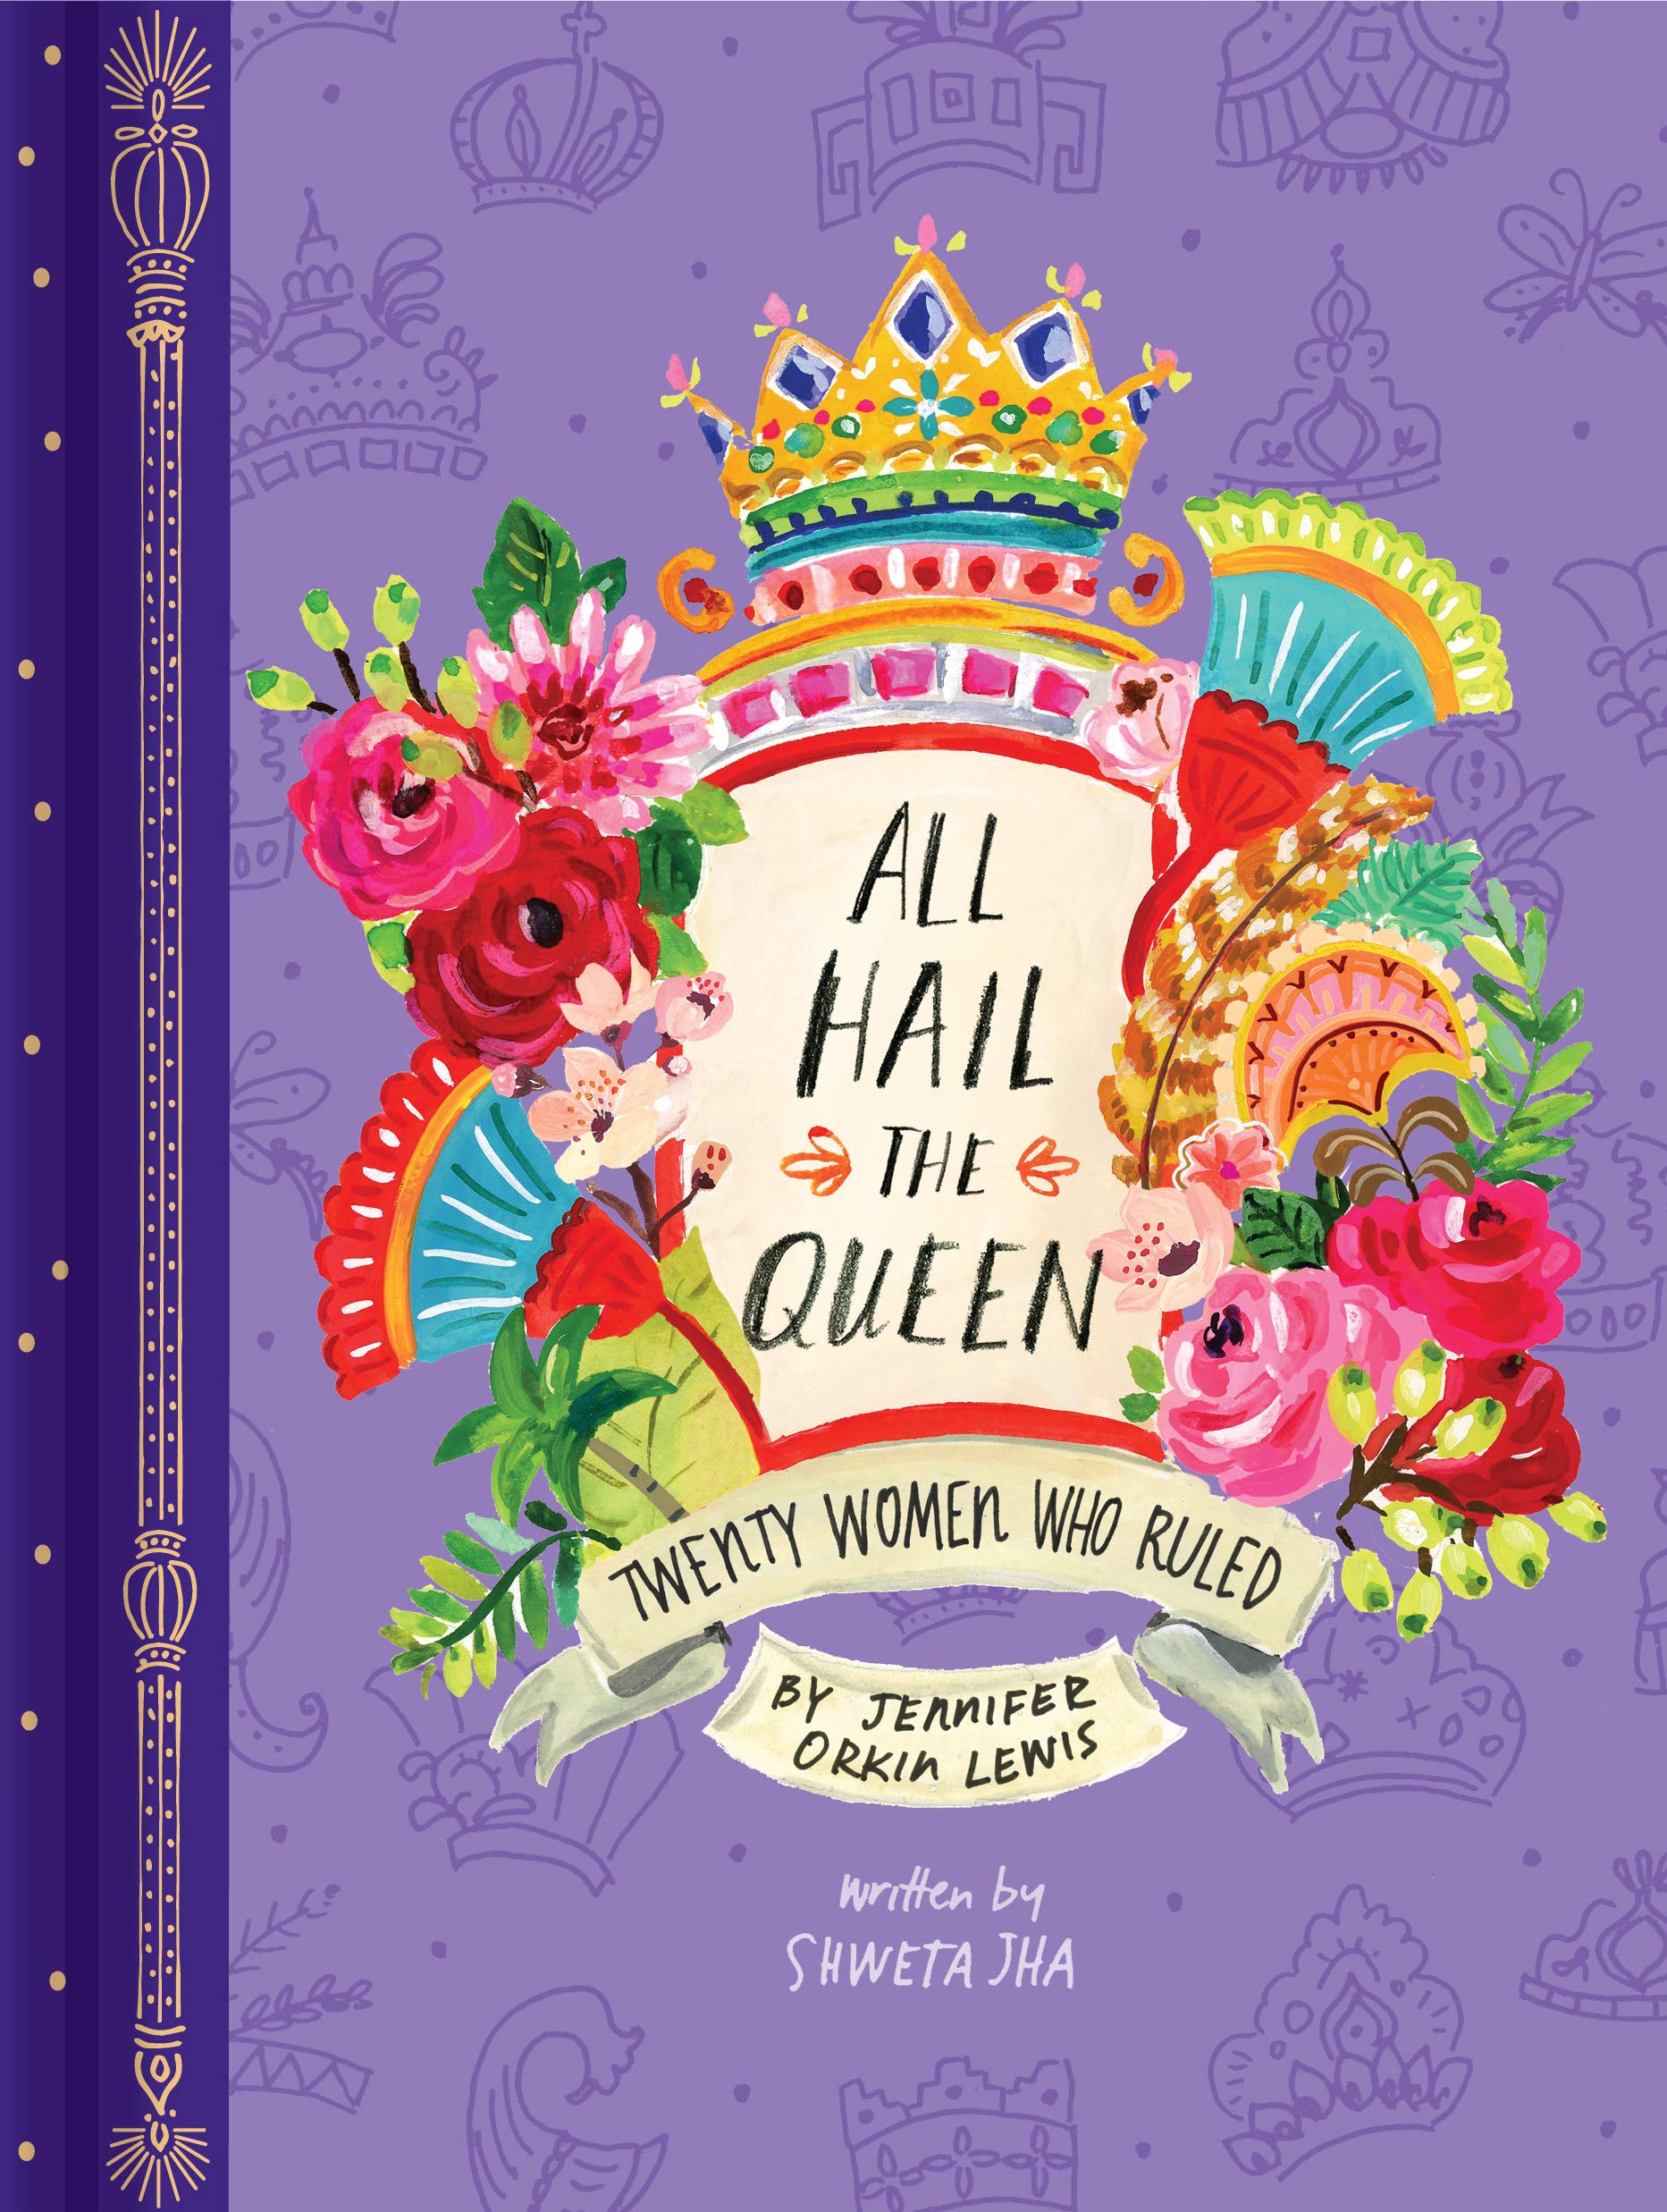 All Hail the Queen | Jennifer Orkin Lewis